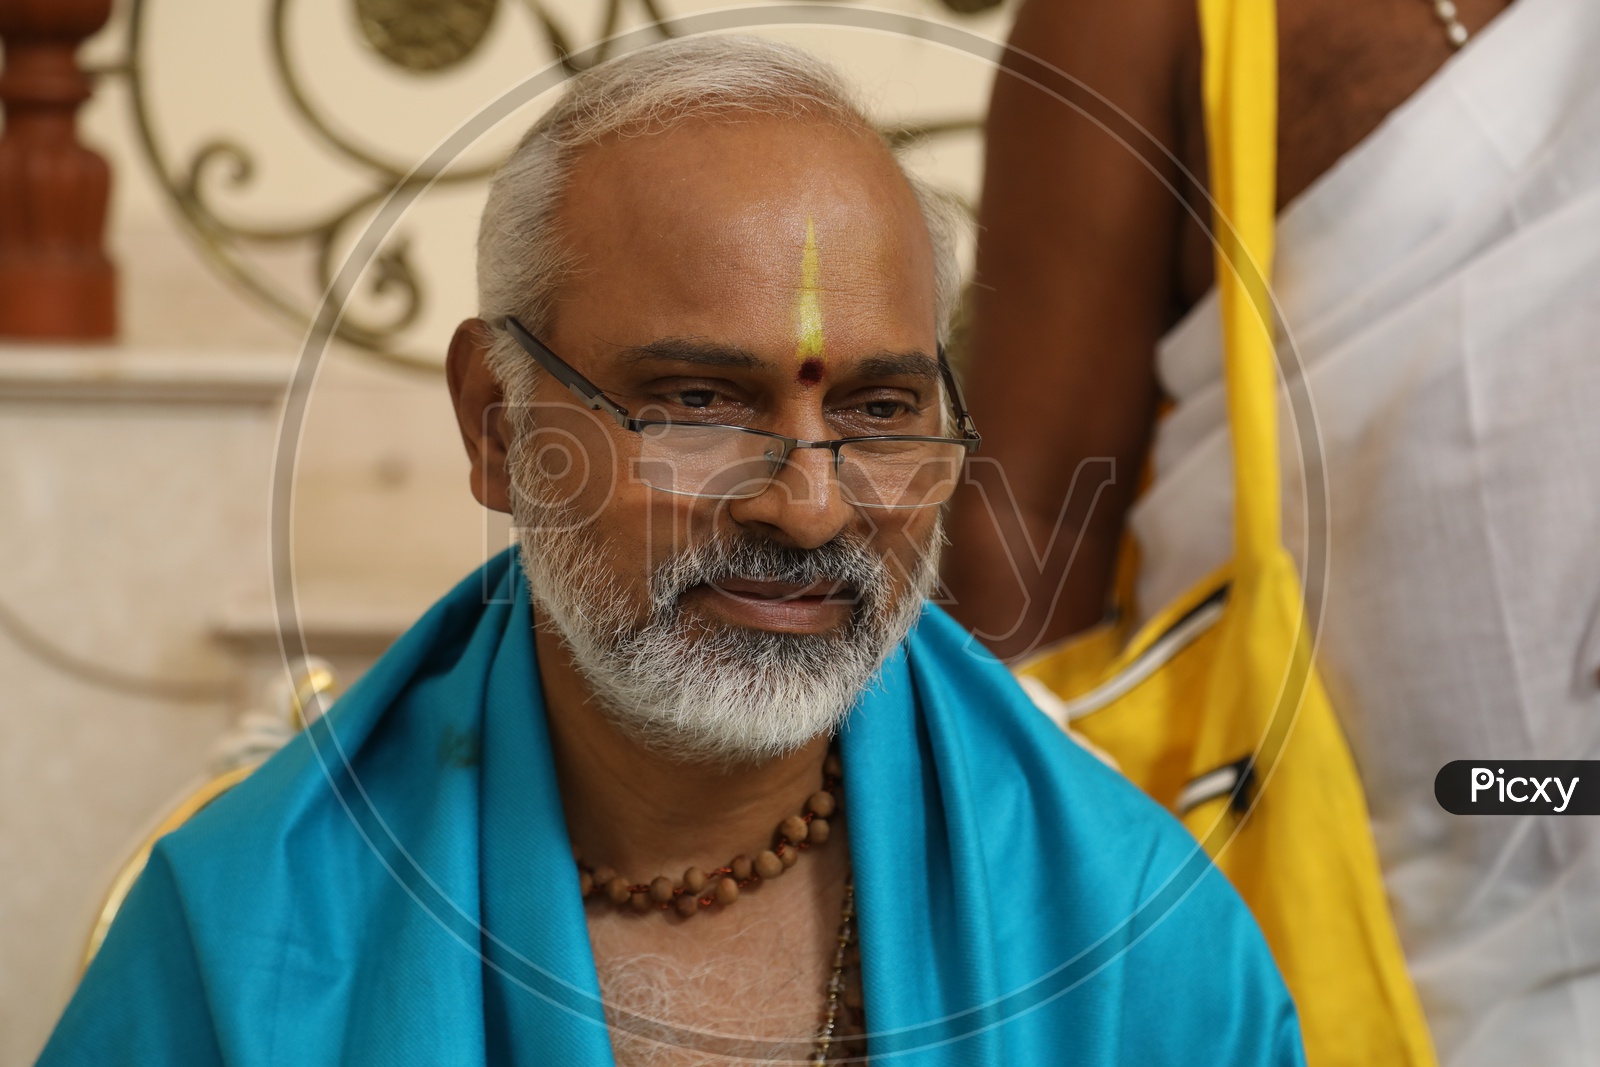 Closeup Shot of Hindu Priest